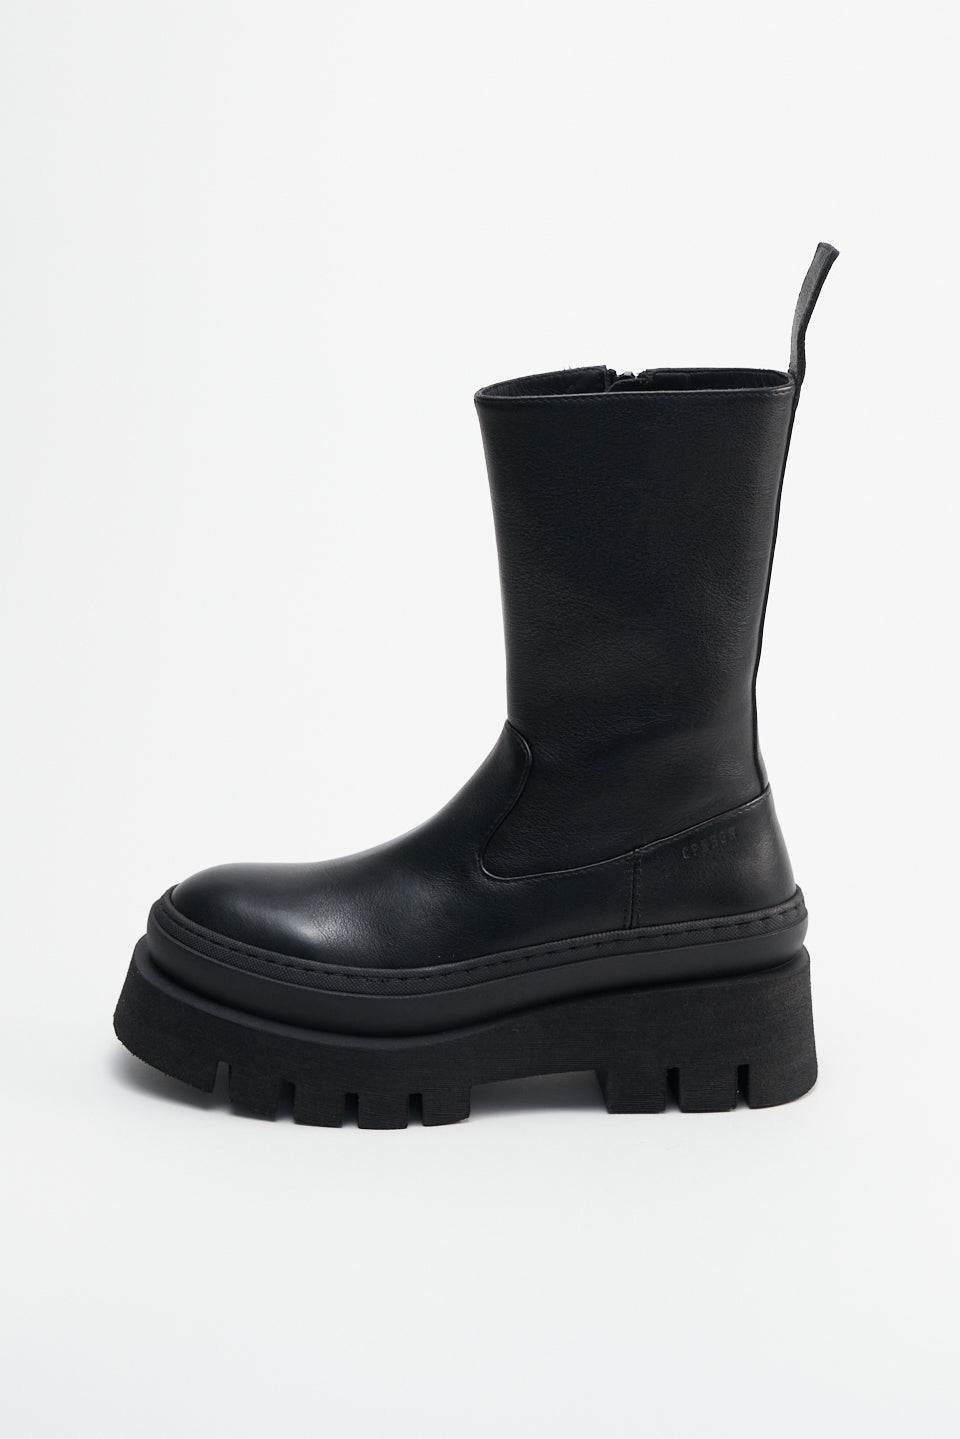 Vitello All Black Leather Boots CPH638_BLACK - 6